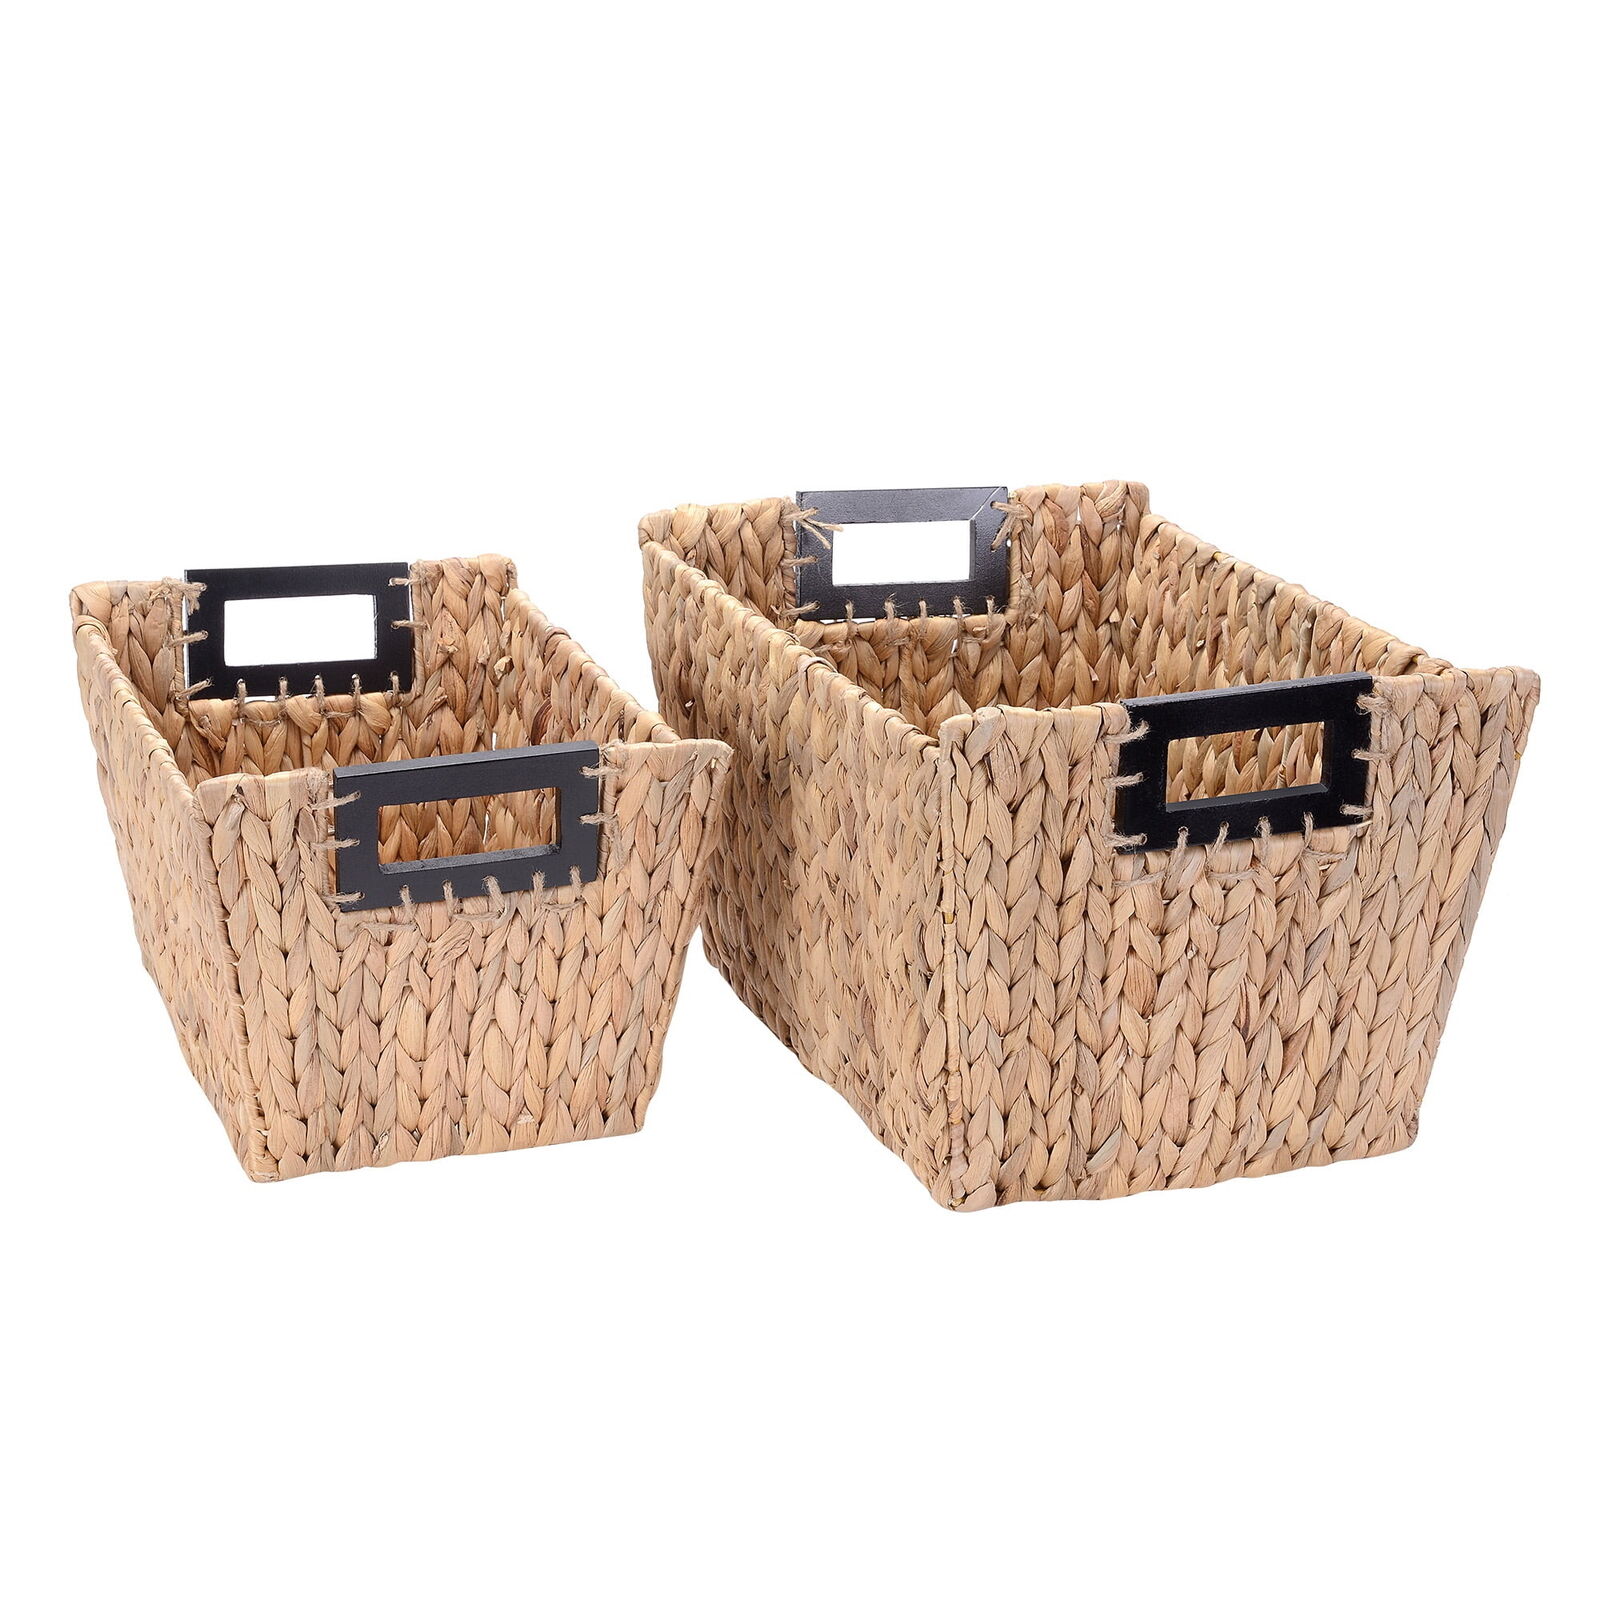 Villacera Rectangle Handmade Wicker Baskets made of Water Hyacinth, Set of 2